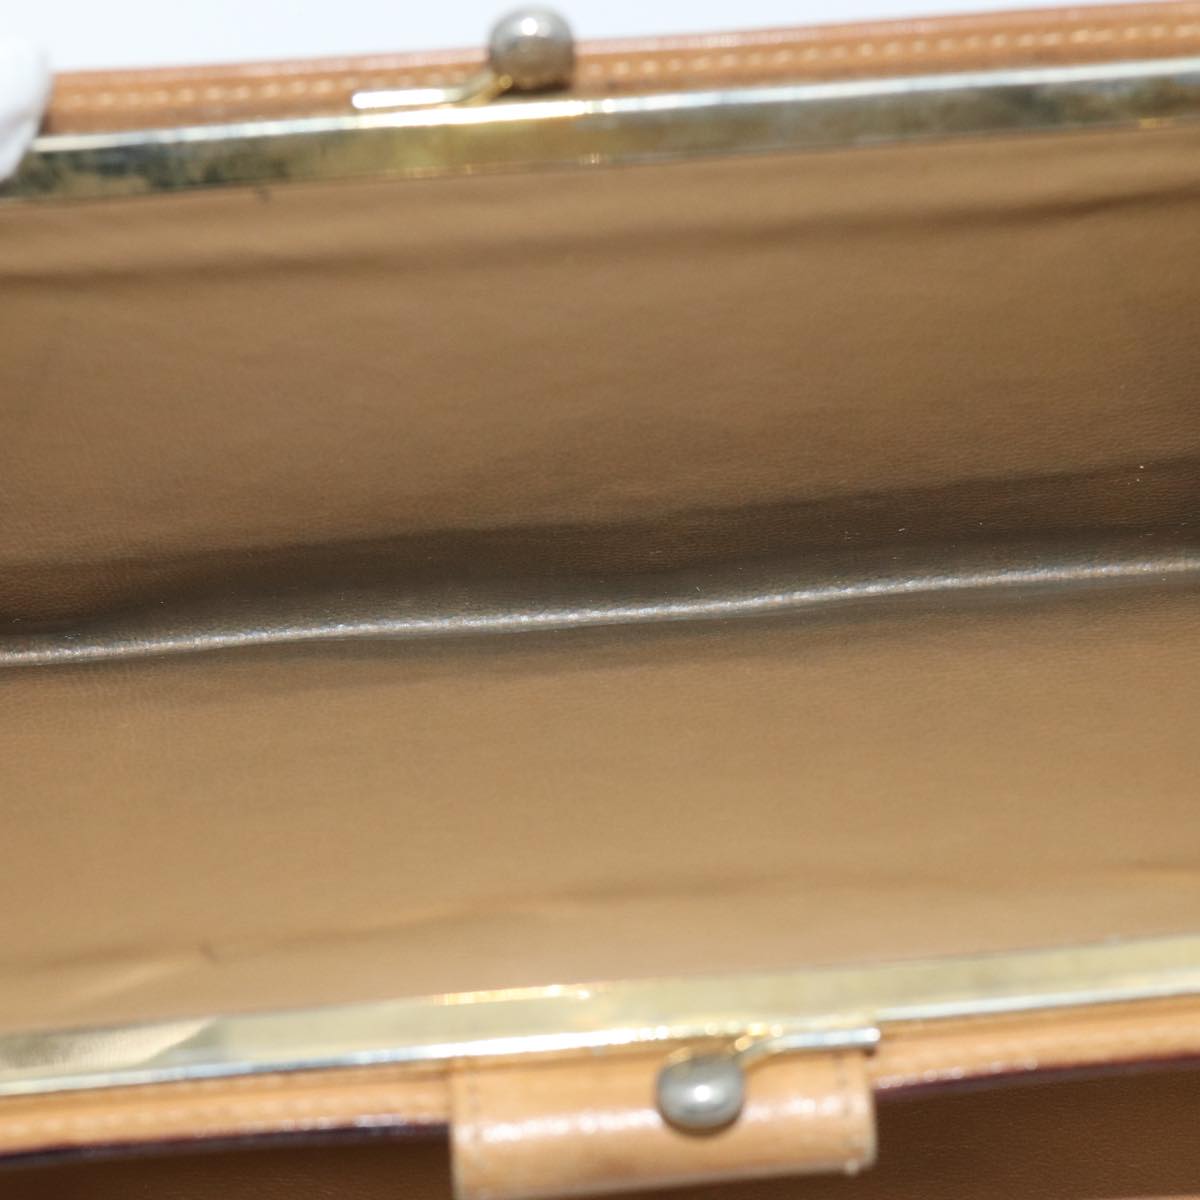 CELINE Macadam Canvas Long Wallet Leather Brown Auth 72095